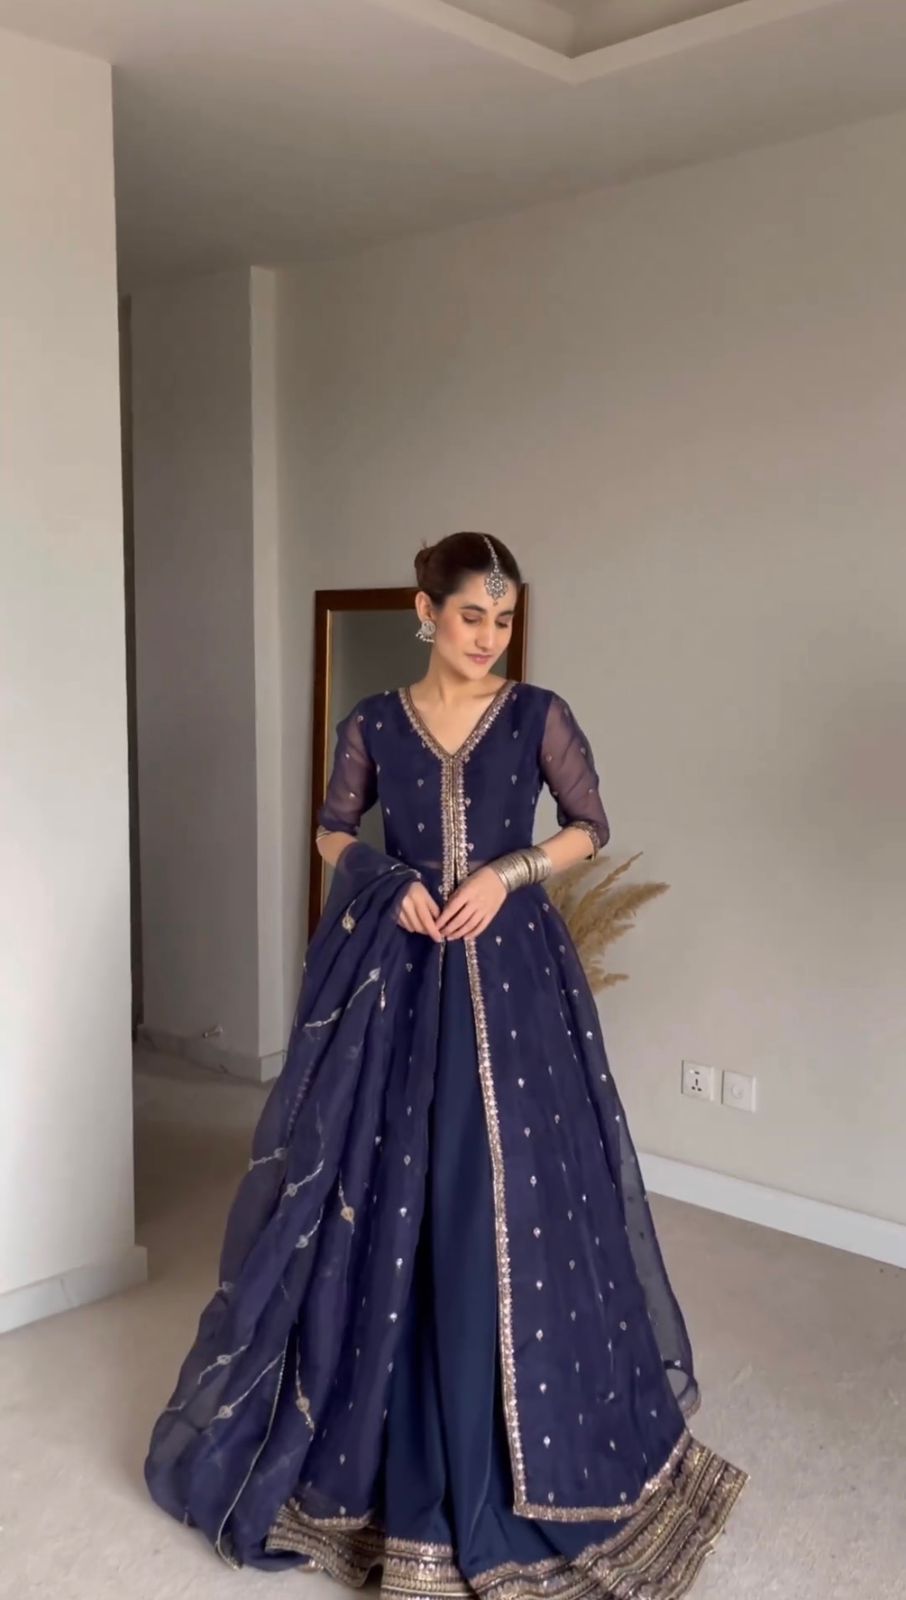 Kriti Sanon looks exquisite in Chikankari suit as she visits temple to seek  blessings for Adipurush song Ram Siya Ram | Fashion Trends - Hindustan Times